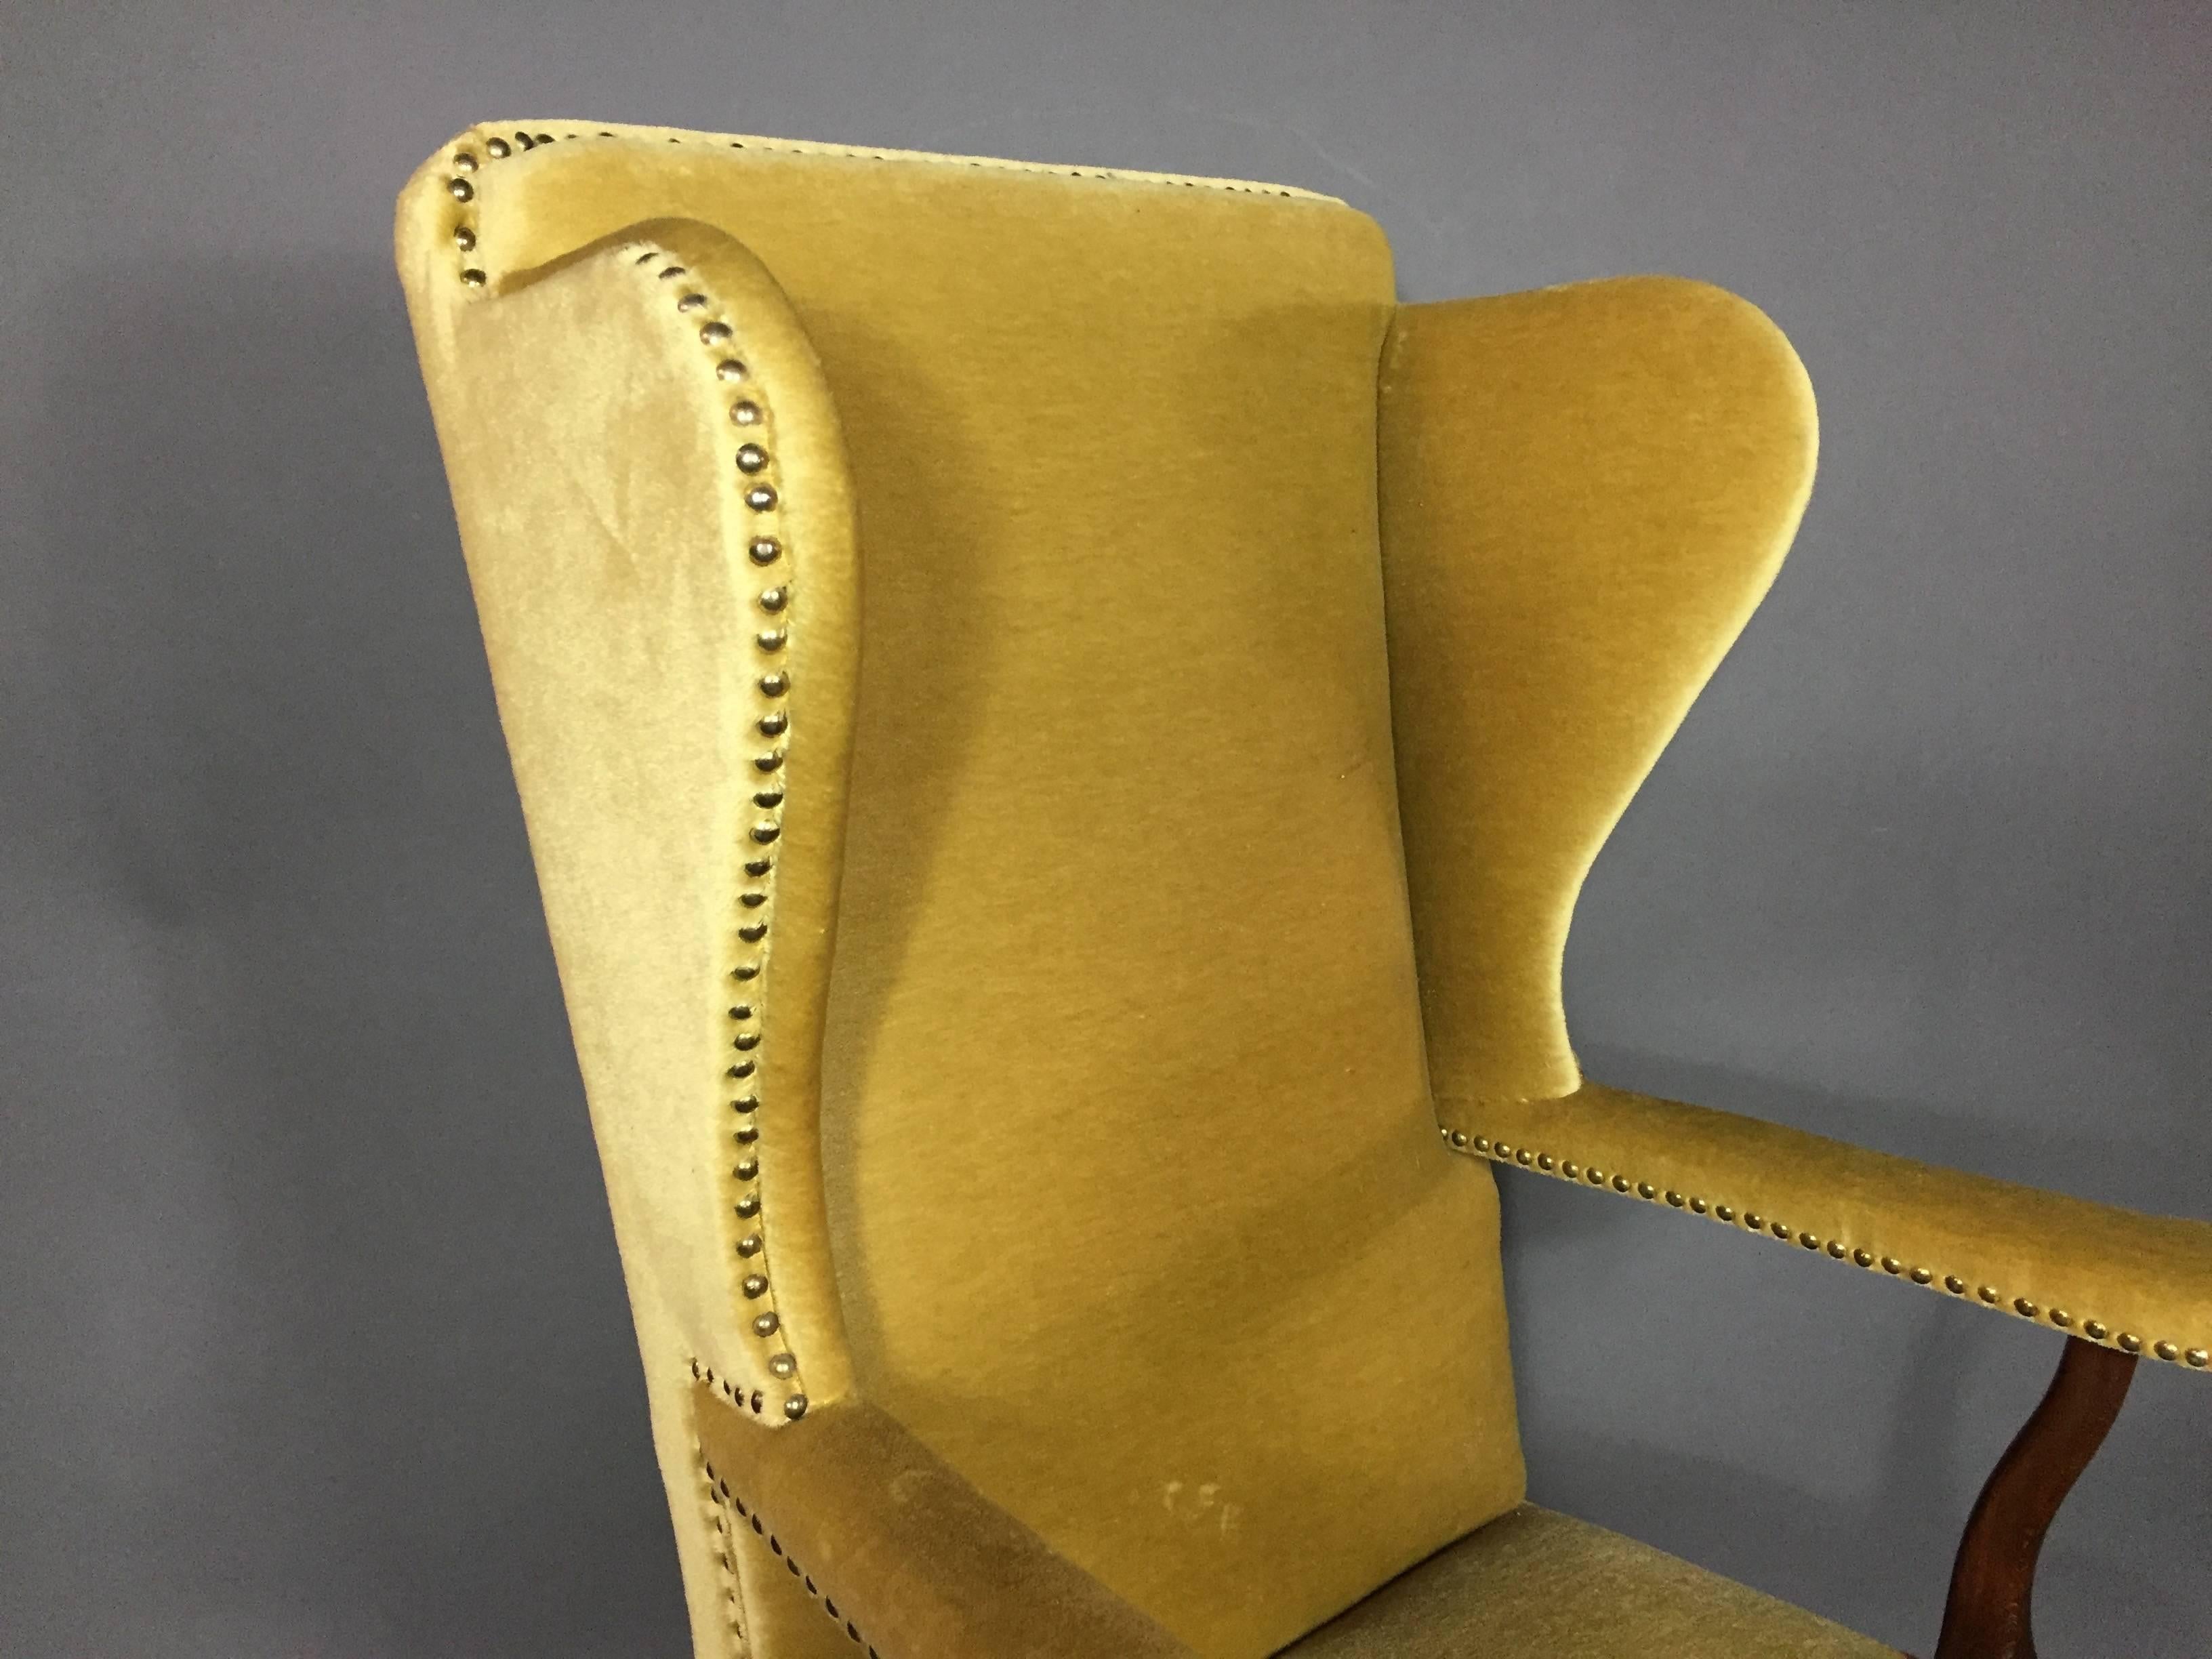 Scandinavian Modern Frits Henningsen Attributed to Wingback Chair in Gold Mohair, Denmark